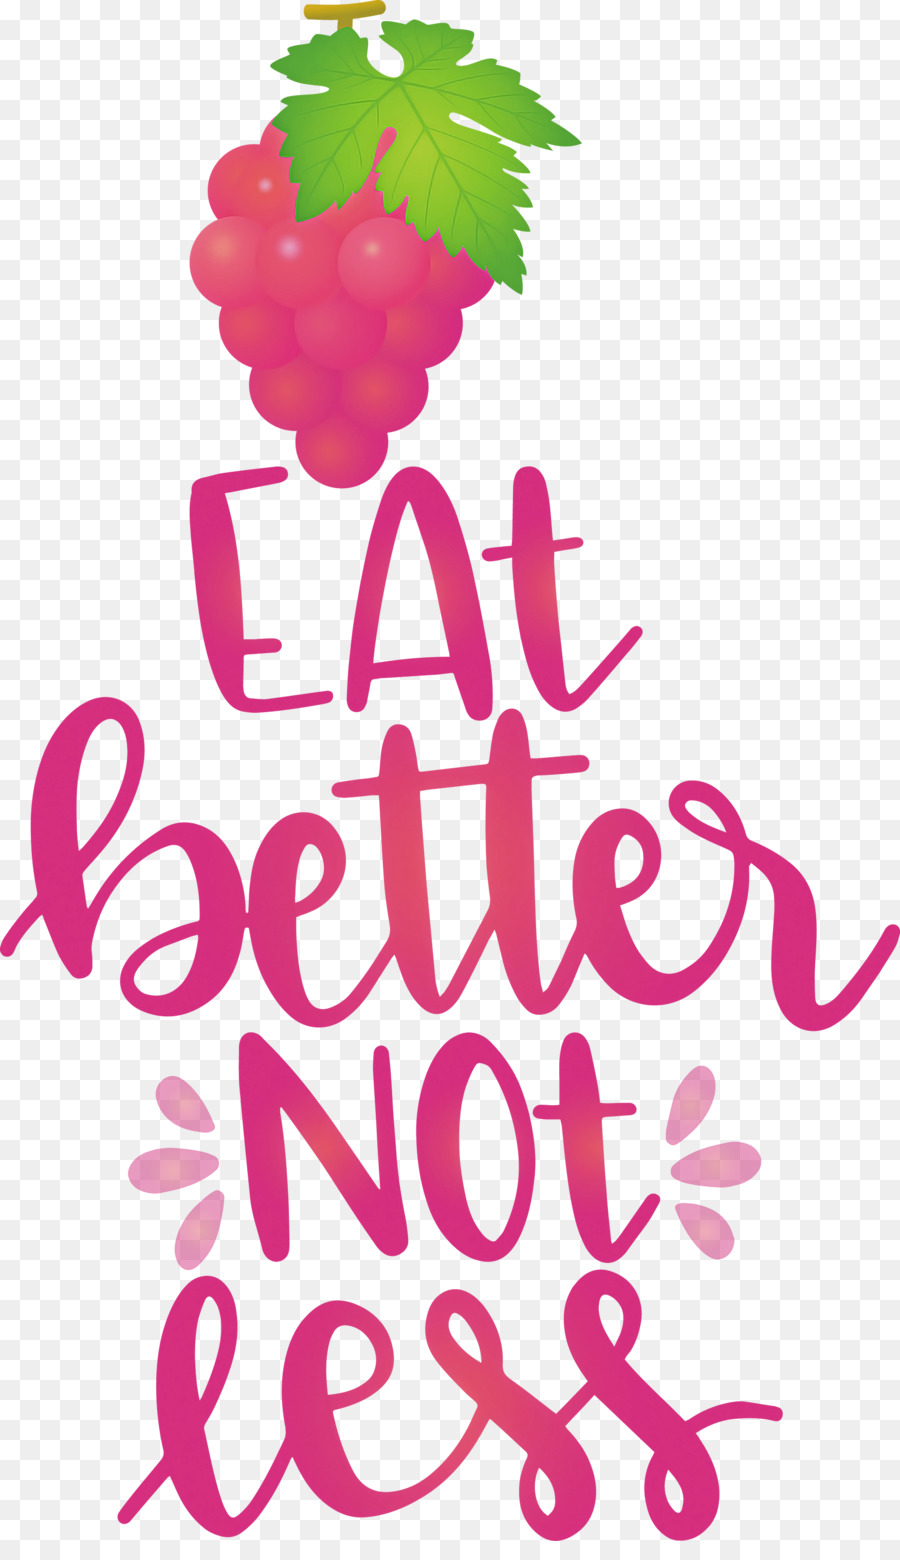 Eat Better Not Less Food Kitchen